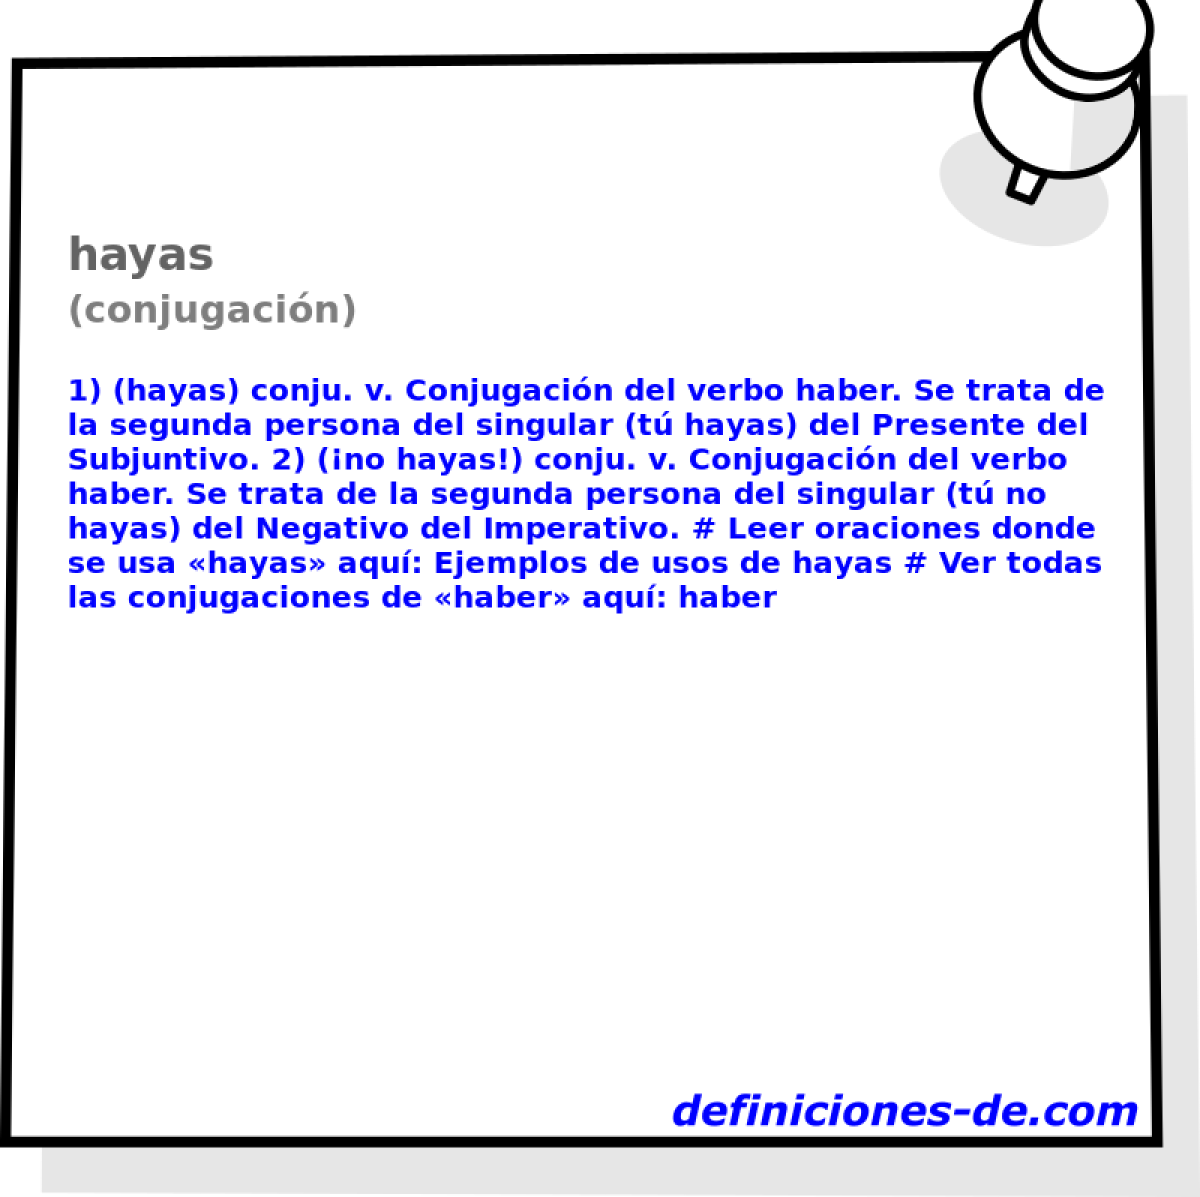 hayas (conjugacin)